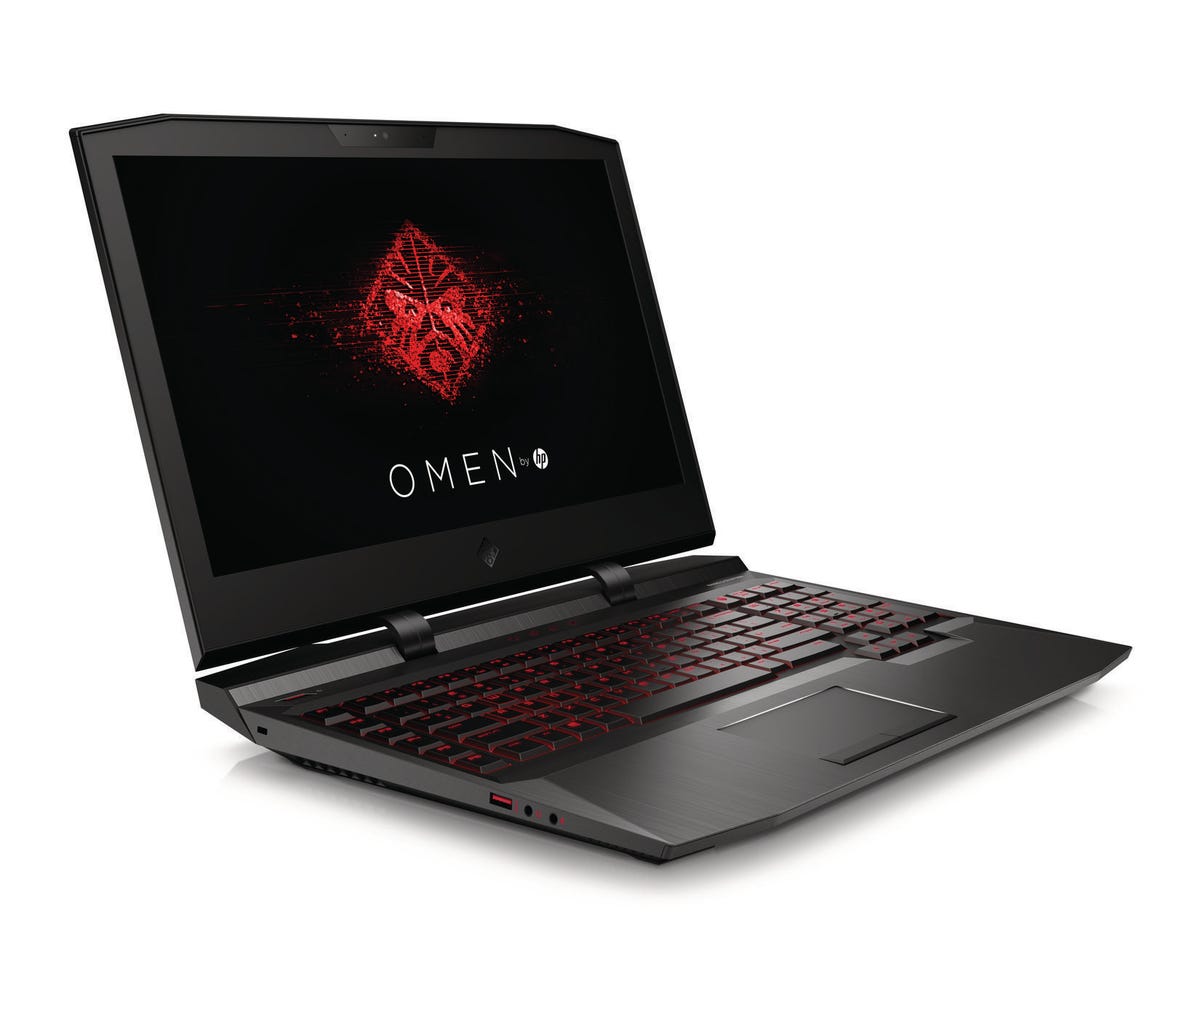 omen-x-laptop-coreset-frontright